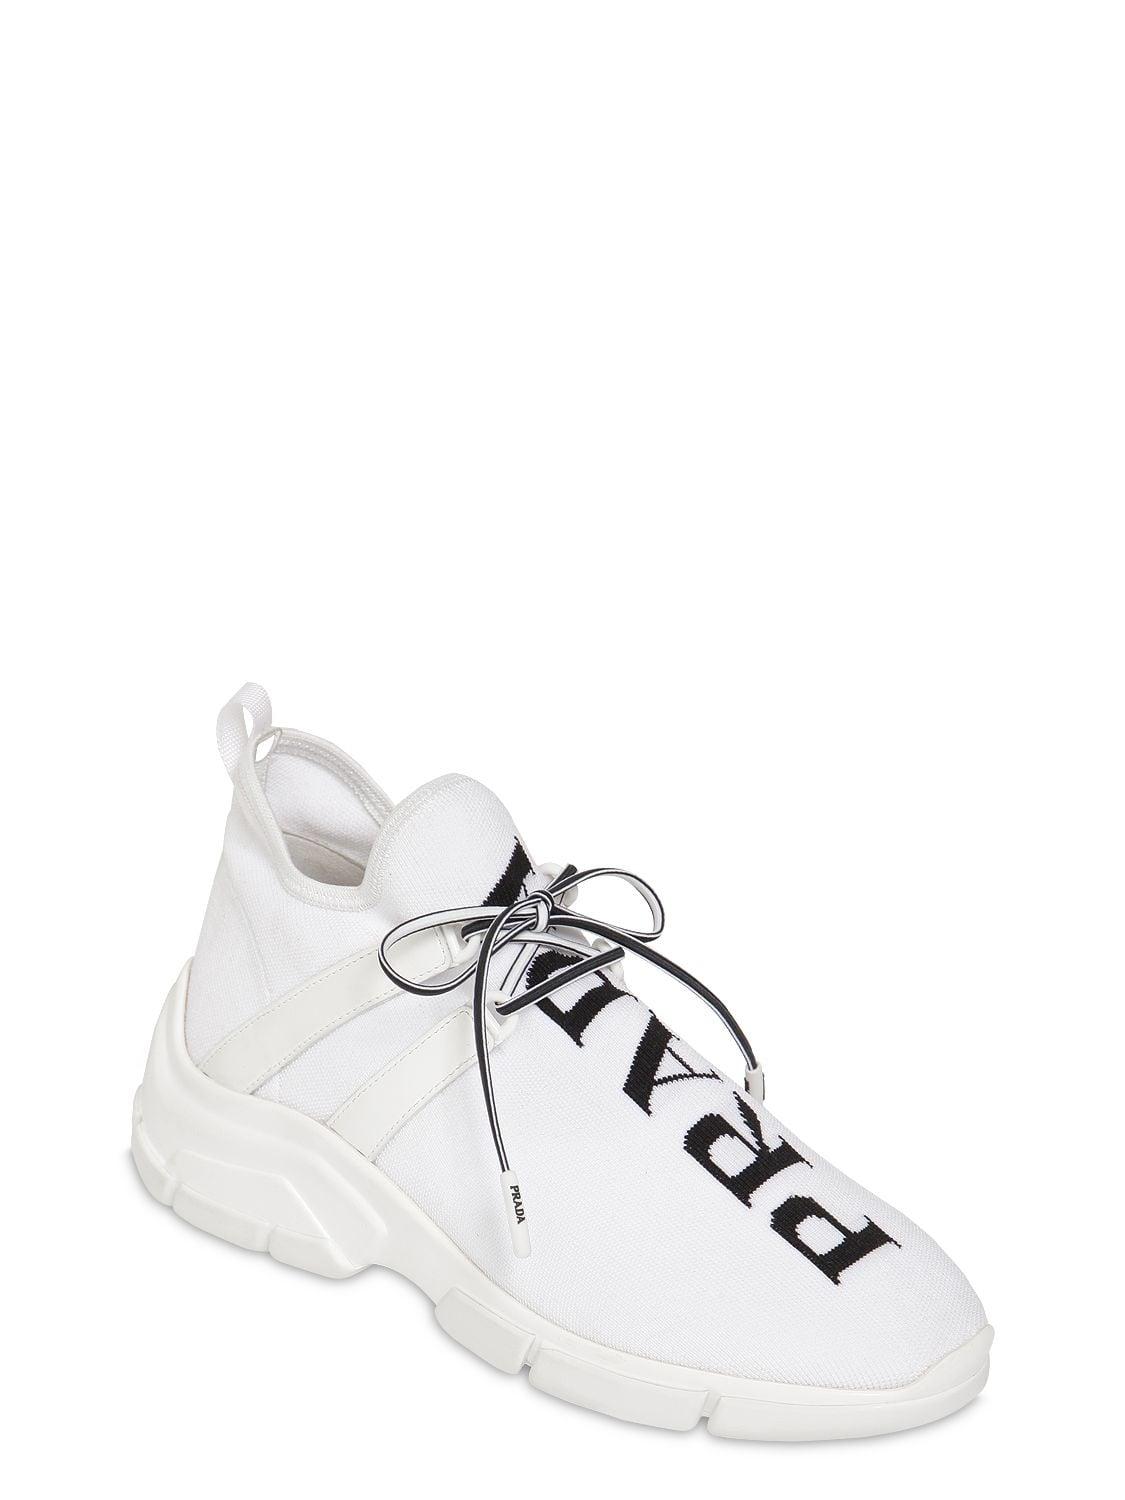 Prada 30mm Knit Sock Sneakers in White - Lyst